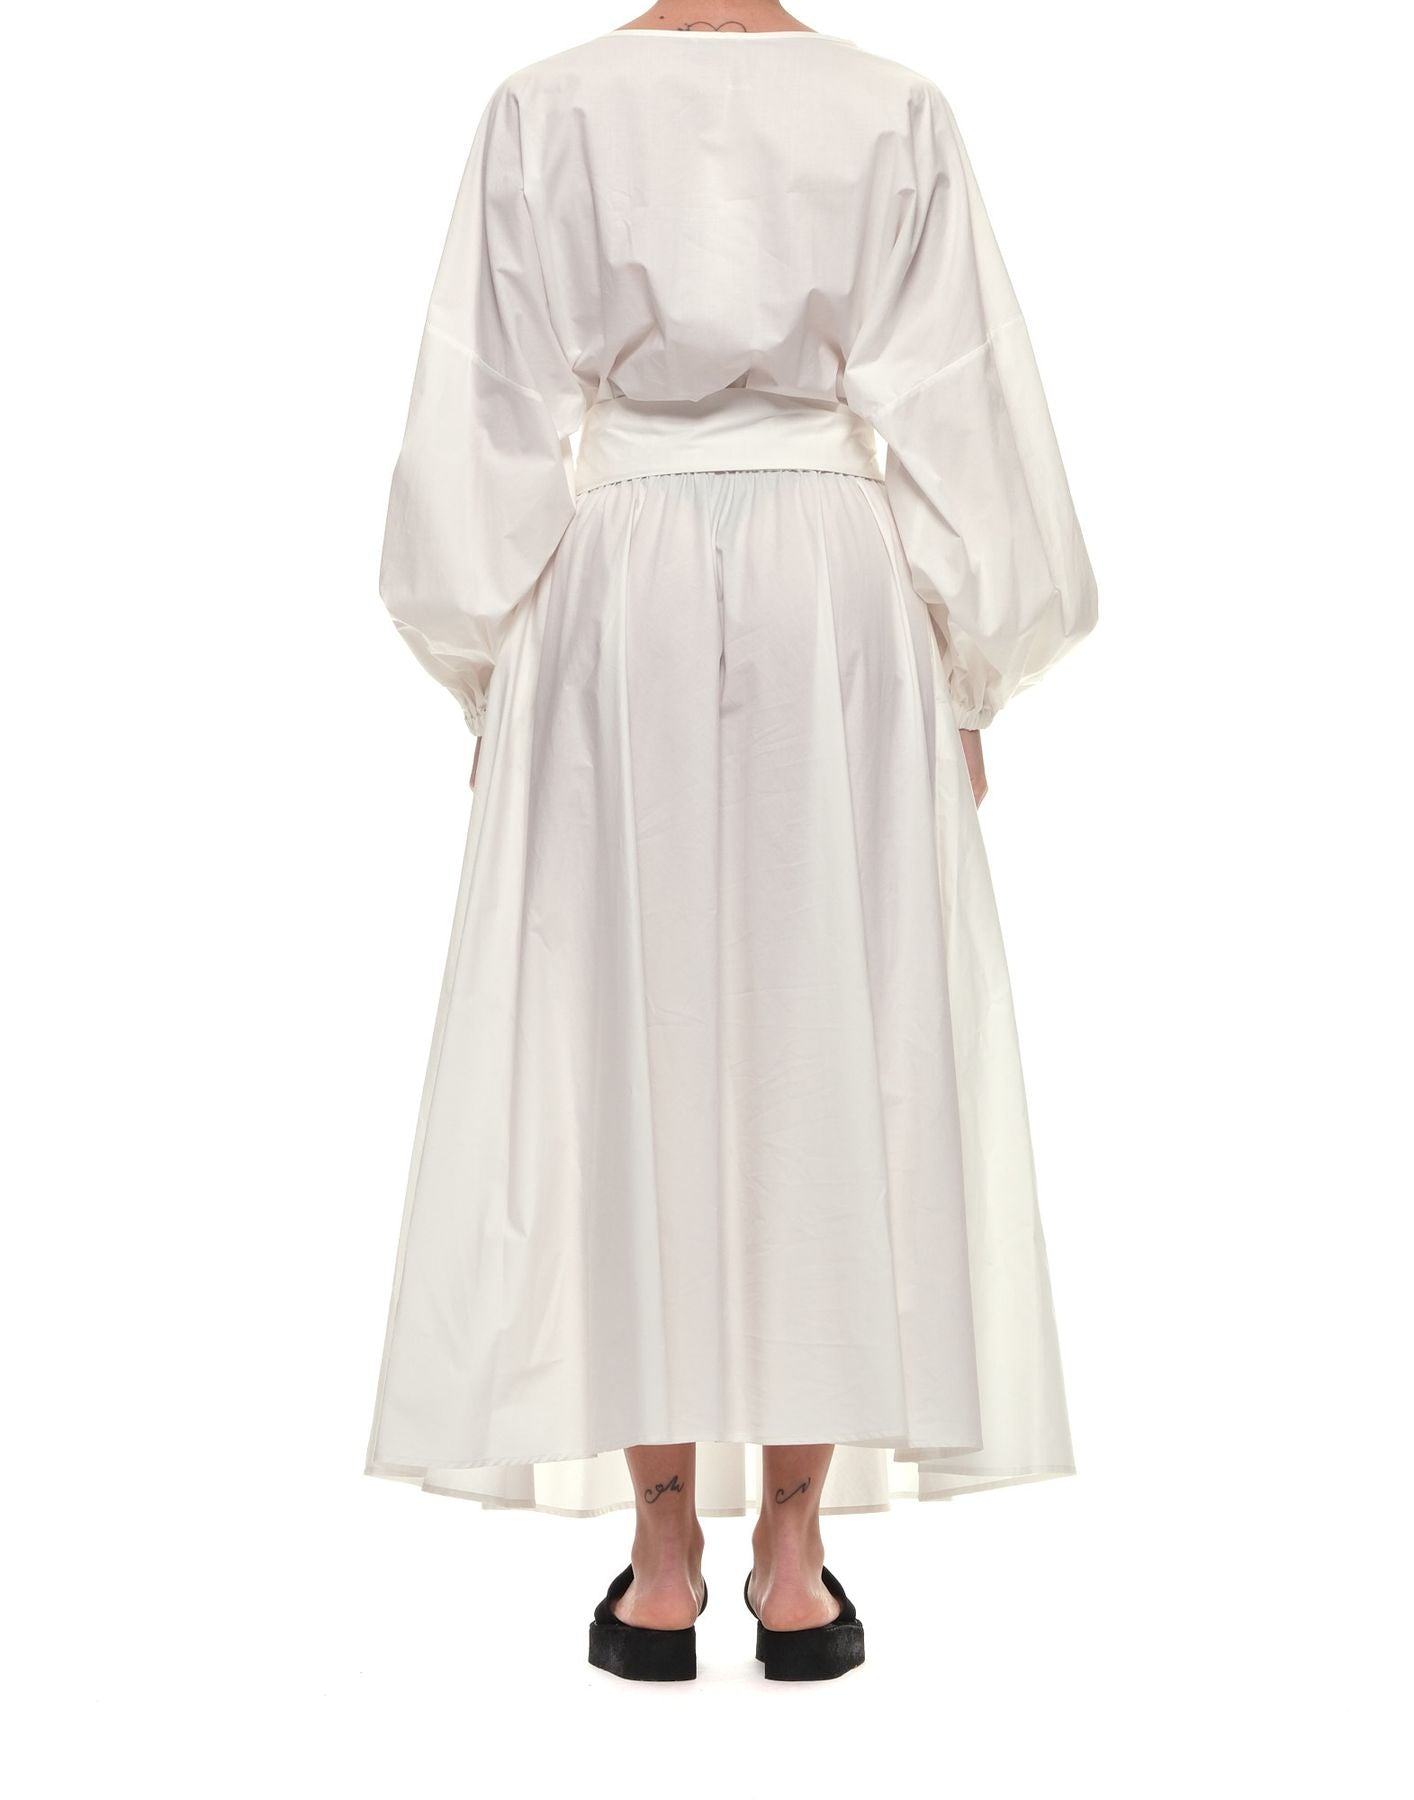 Robe pour femme Pinka 307 Hanami d'Or